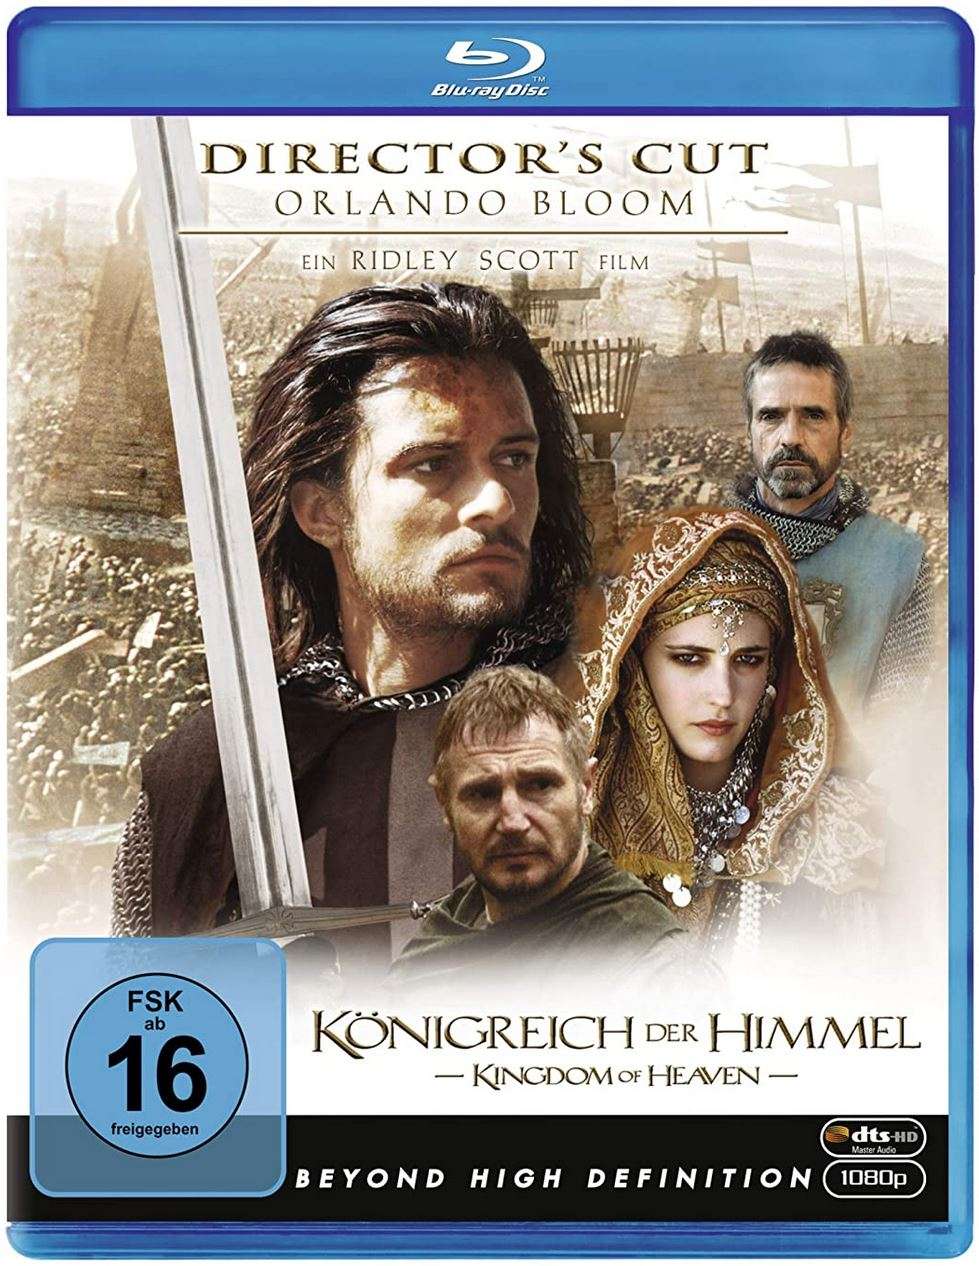 "KÖNIGREICH DER HIMMEL", Director's Cut, Blu-Ray